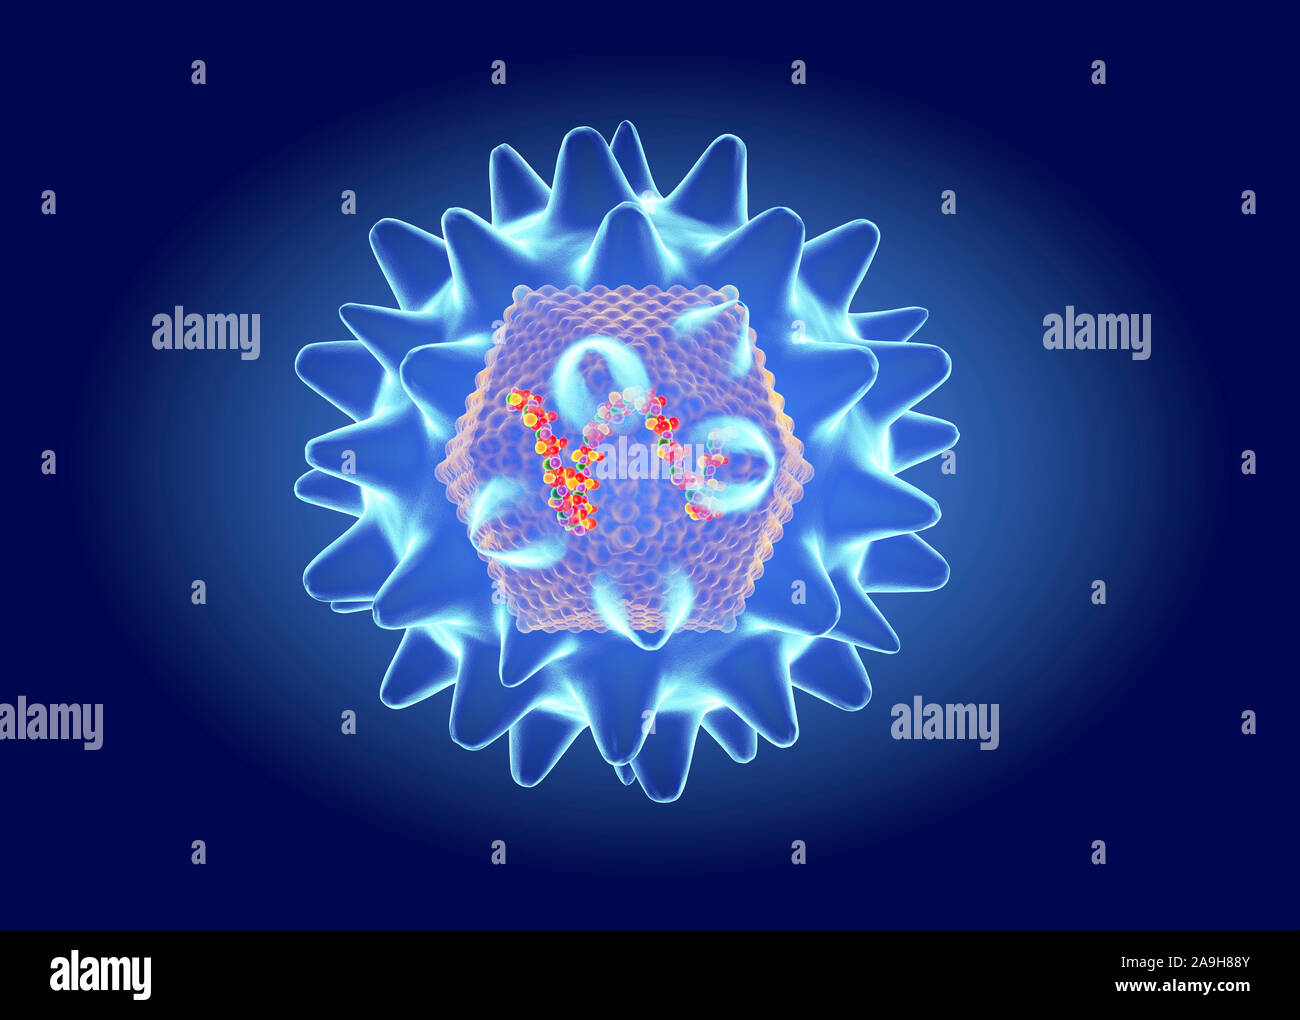 Virus hanta fotografías e imágenes de alta resolución - Alamy